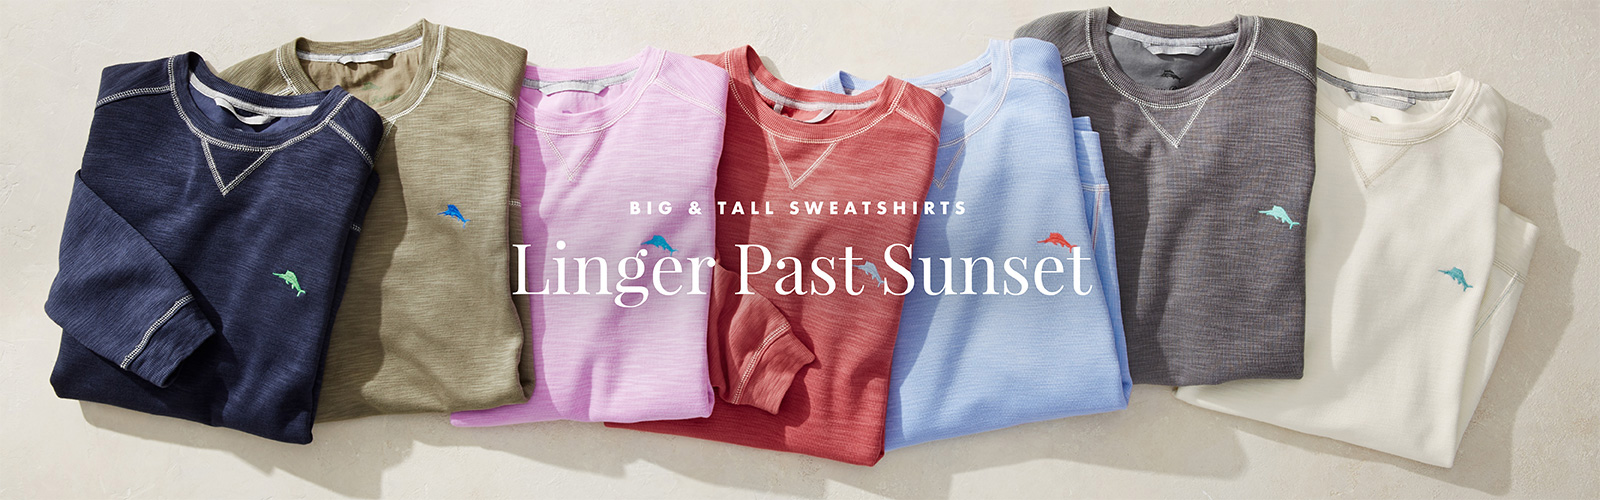 Big & Tall Sweatshirts - Linger Past Sunset